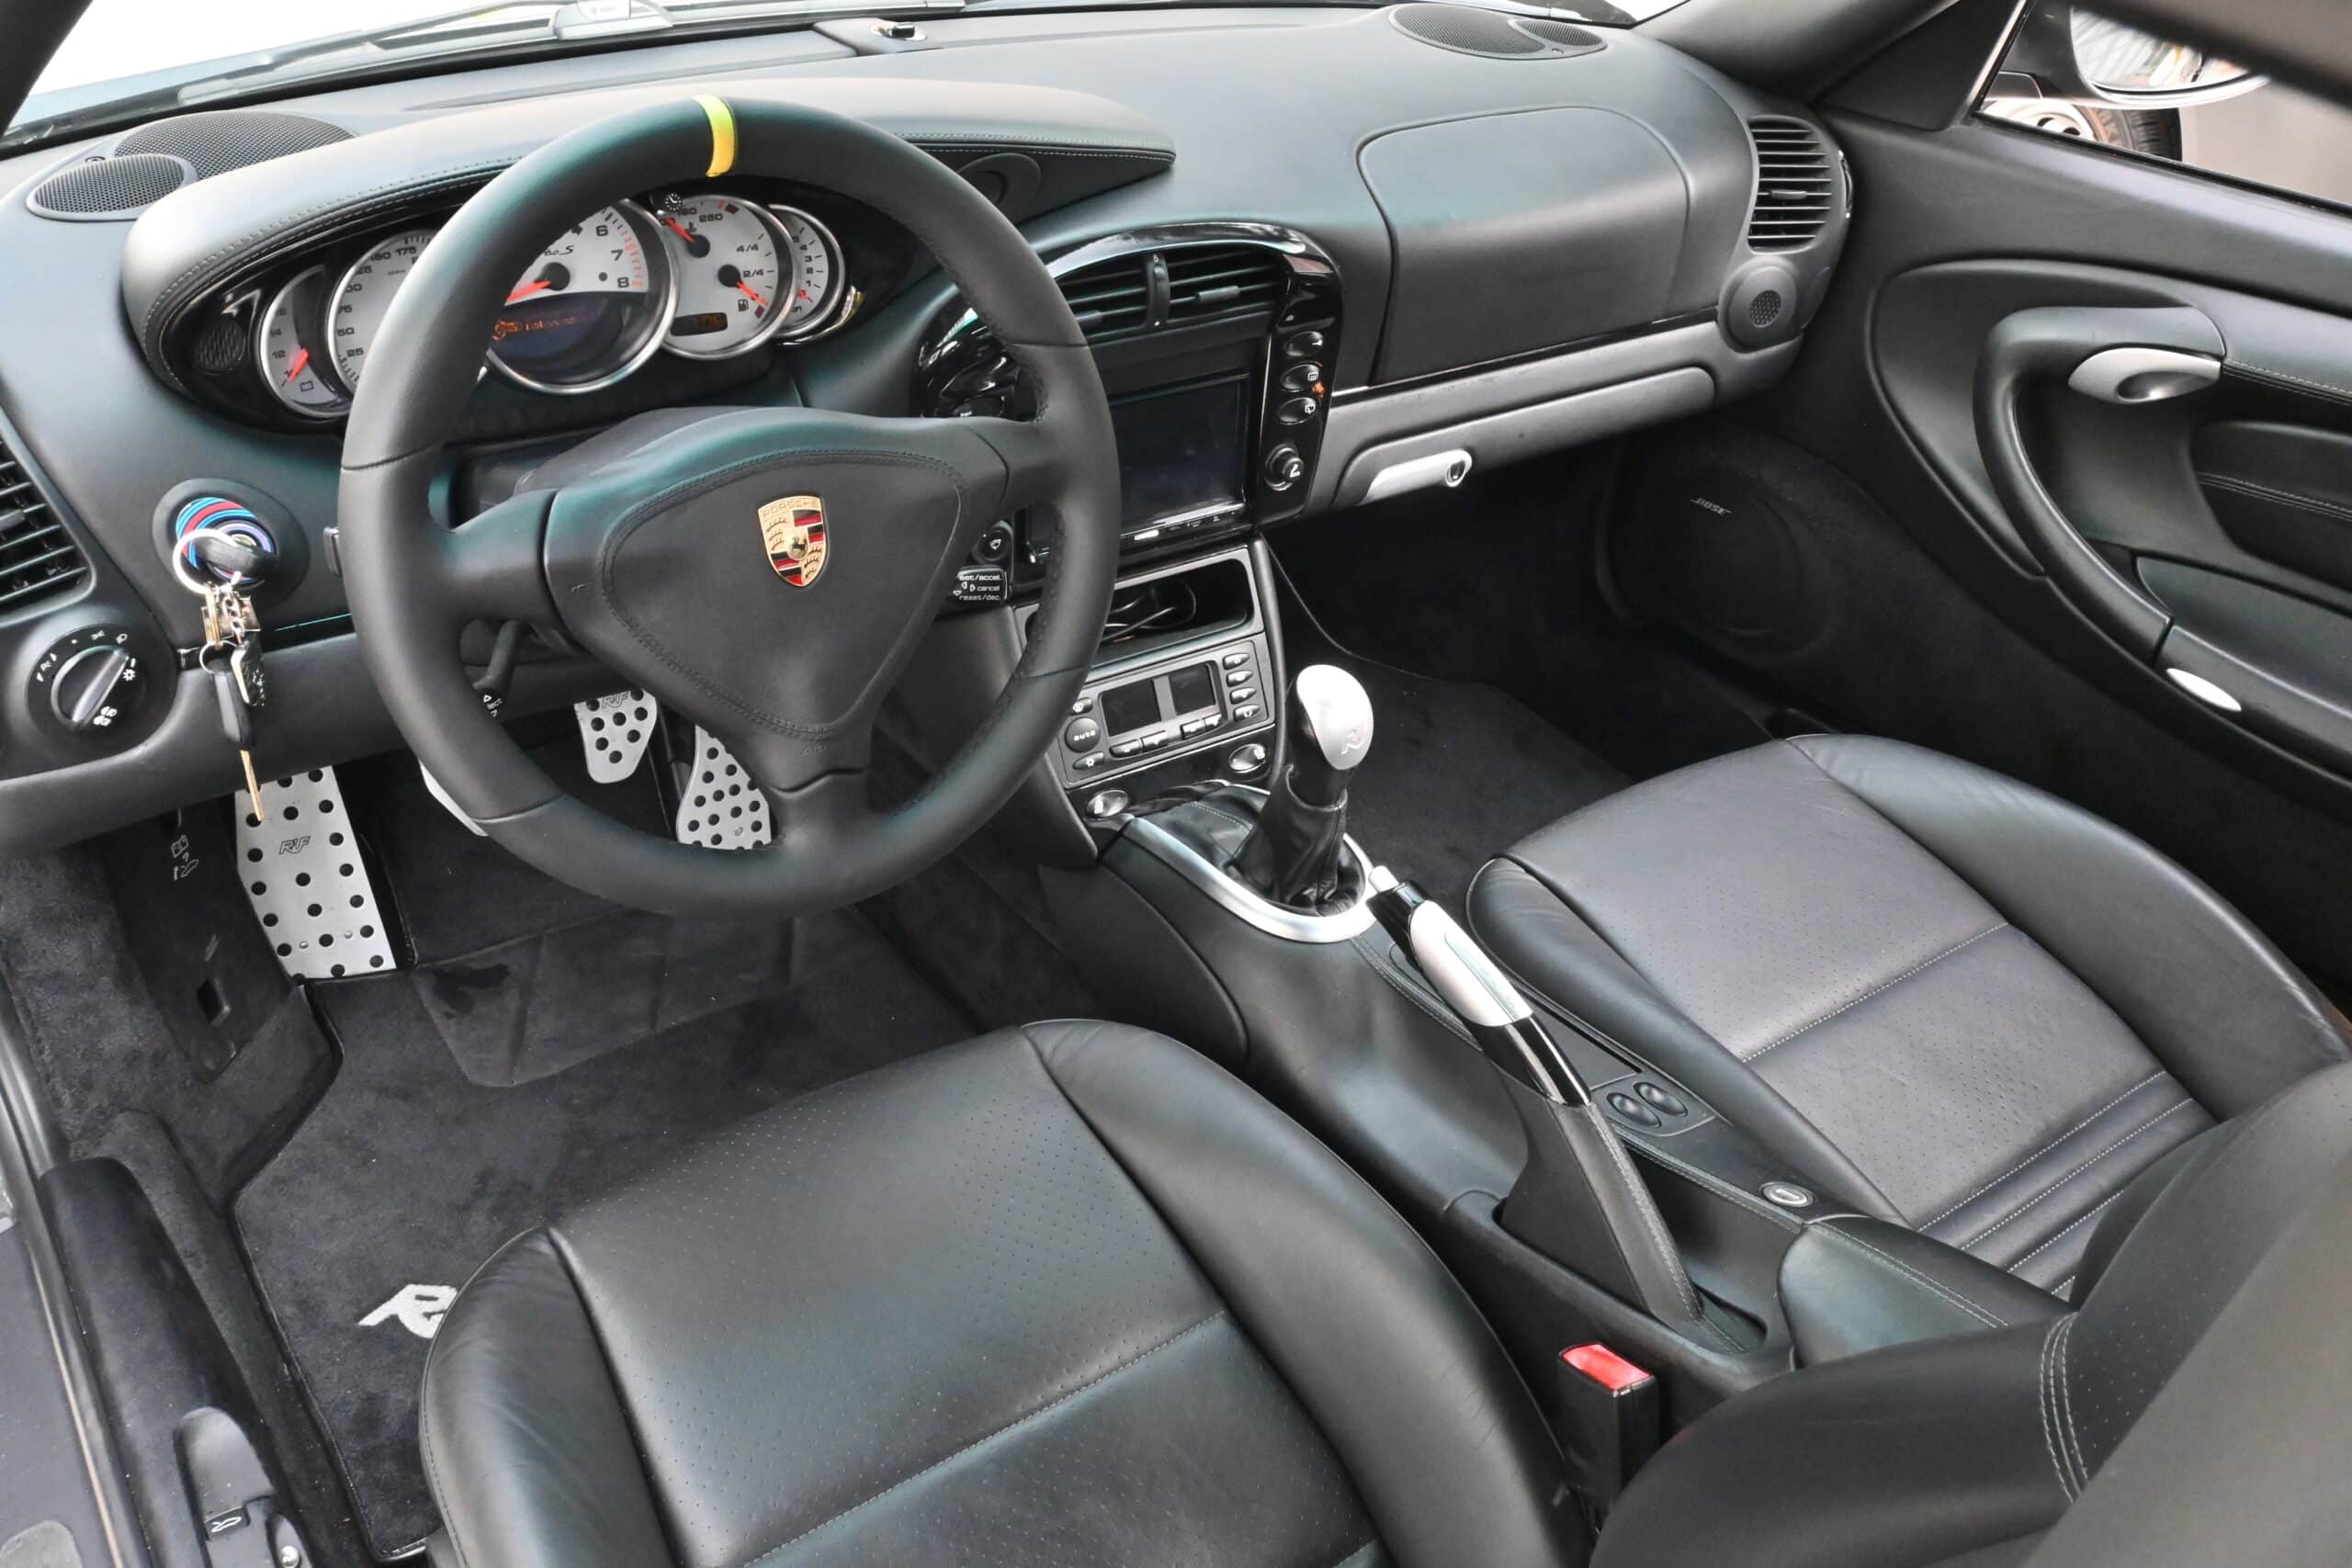 2005 Porsche 911 Turbo S 996 Original Paint-Carbon Ceramic Brakes-Sport Seats- RUF Upgrades- RARE TURBO S